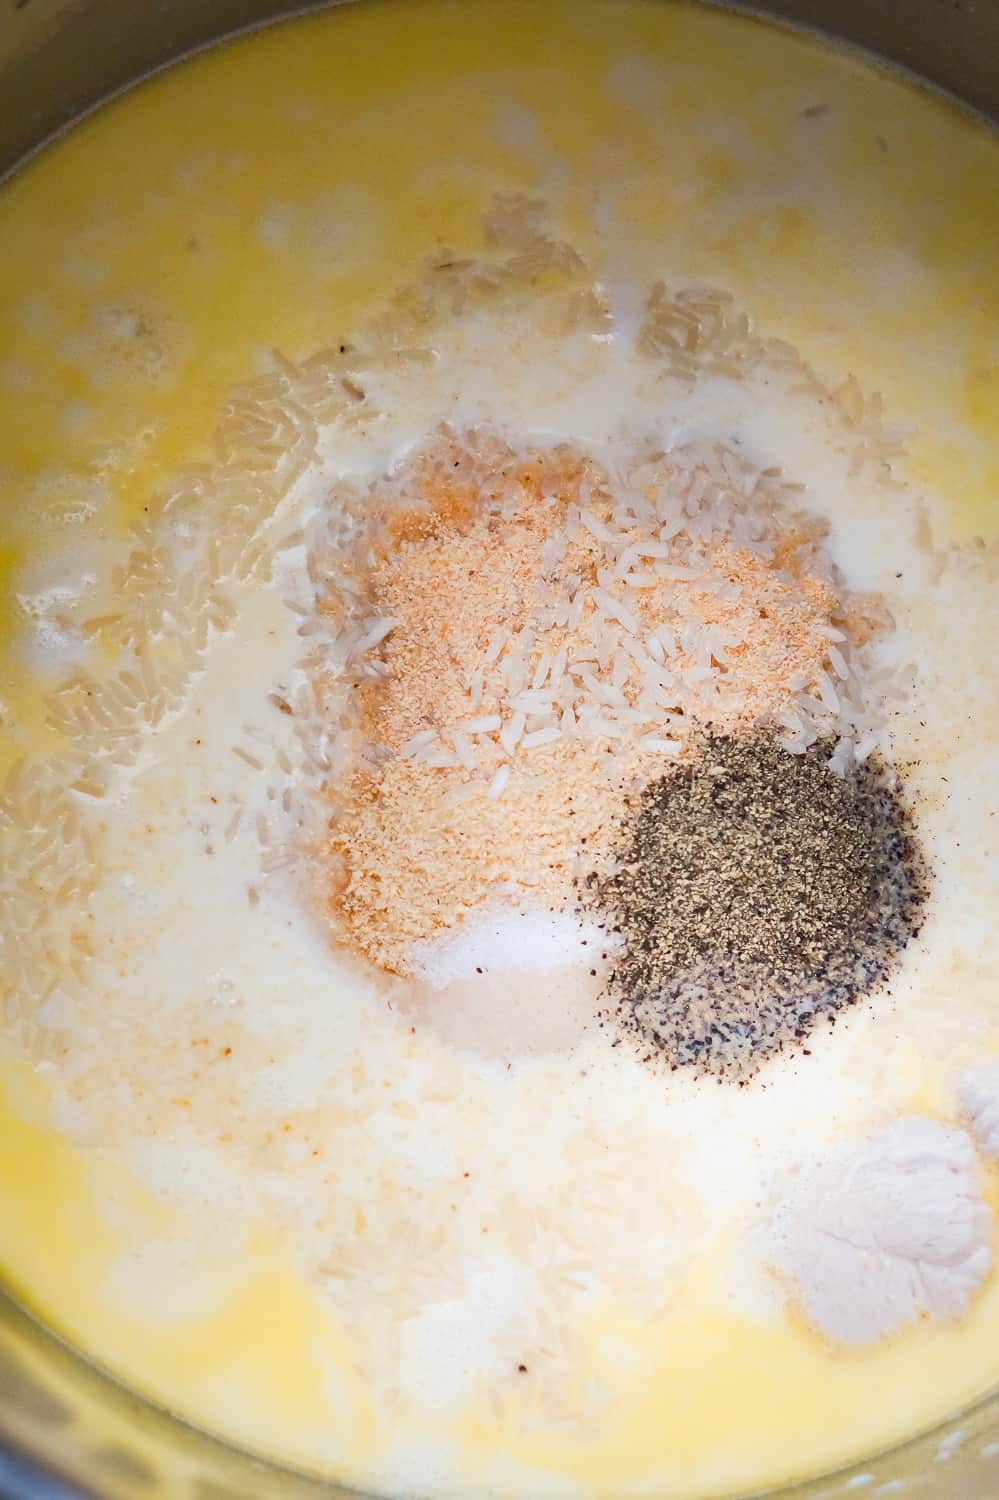 rice, garlic powder, alt and pepper in a creamy liquid in an Instant Pot